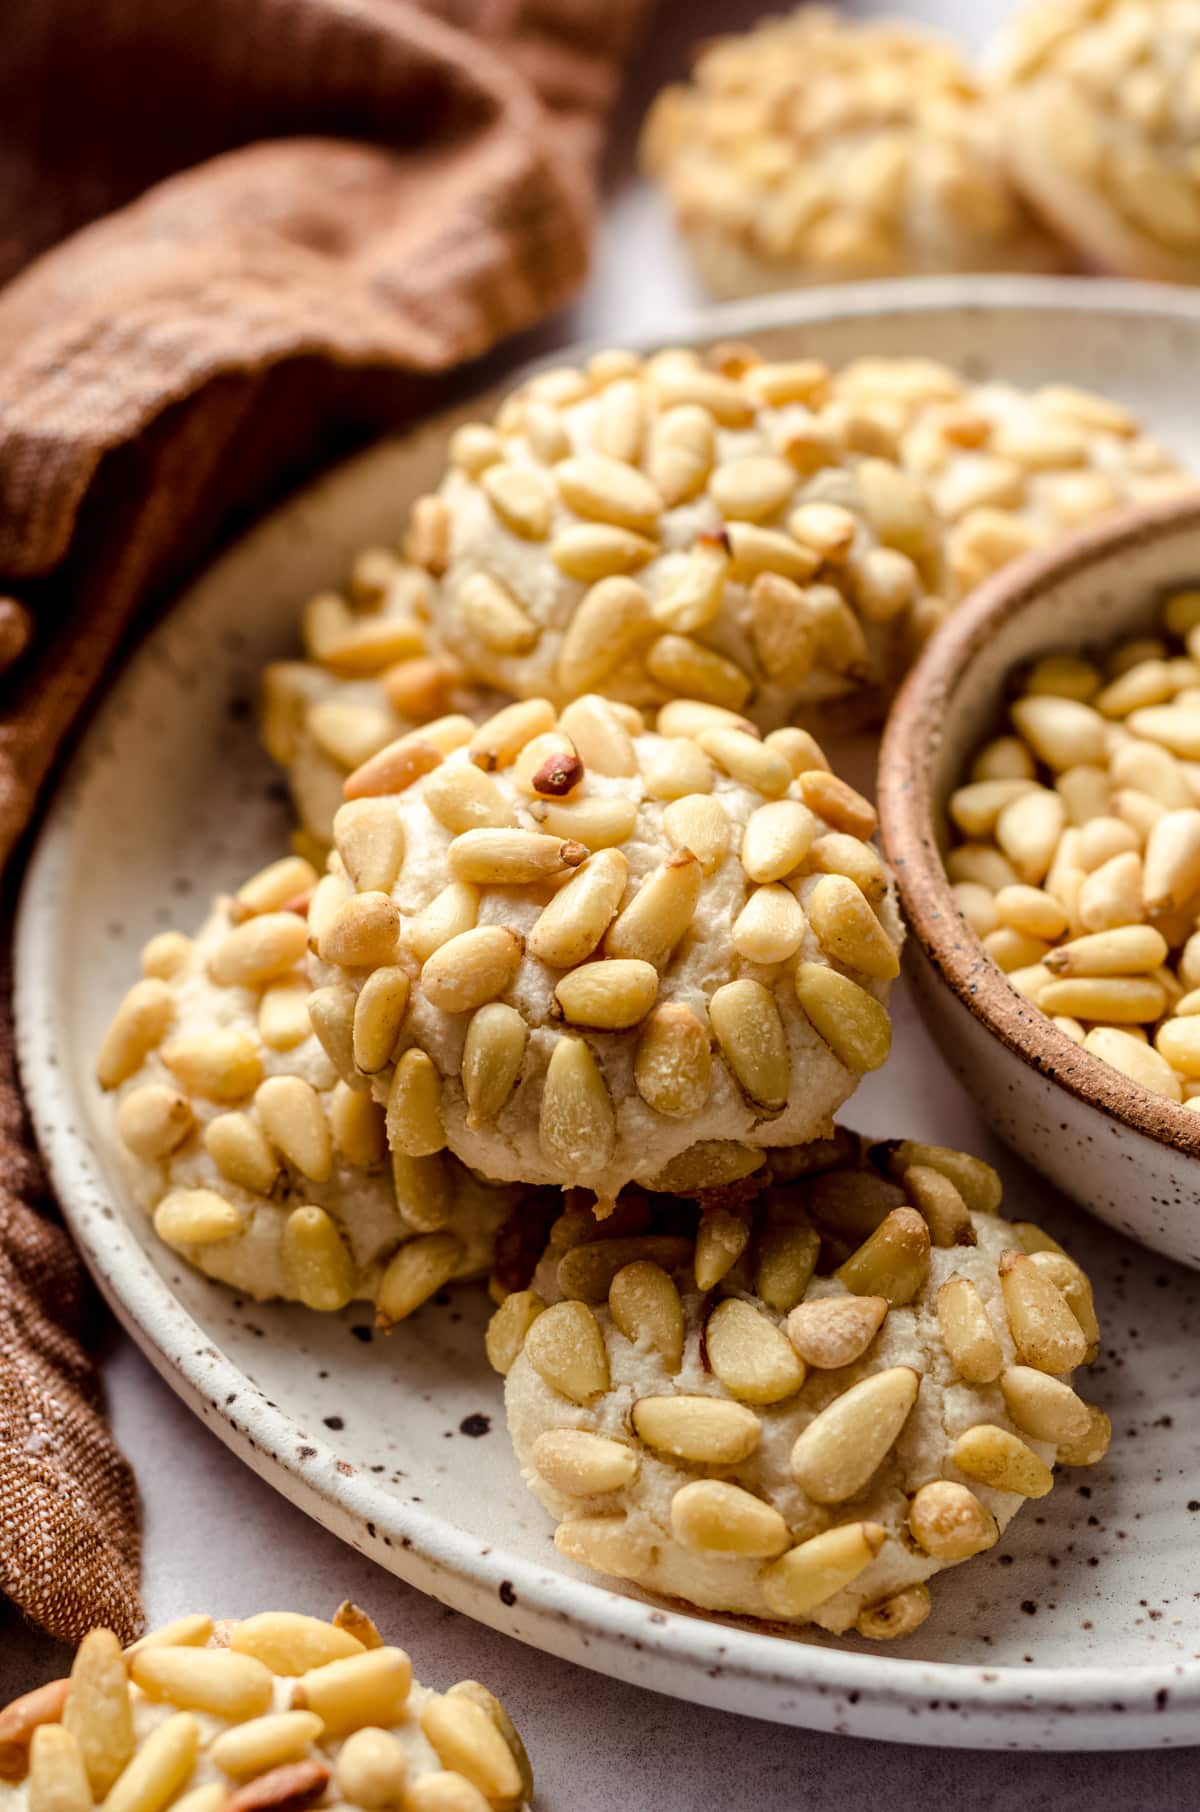 A plate of pine nut encrusted cookies.